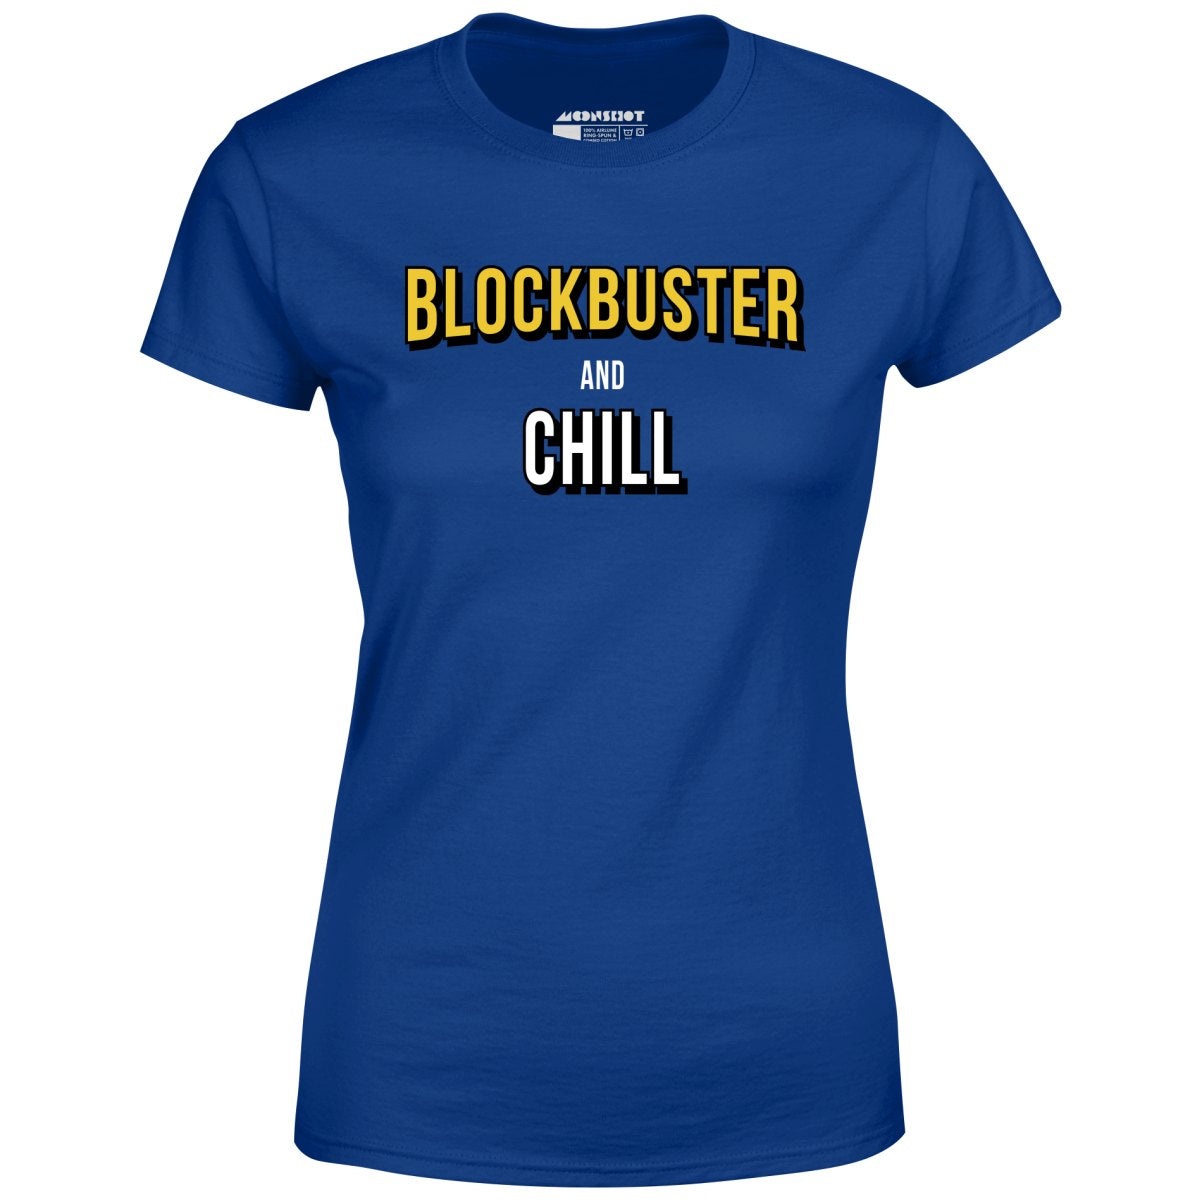 Blockbuster and Chill - Women's T-Shirt